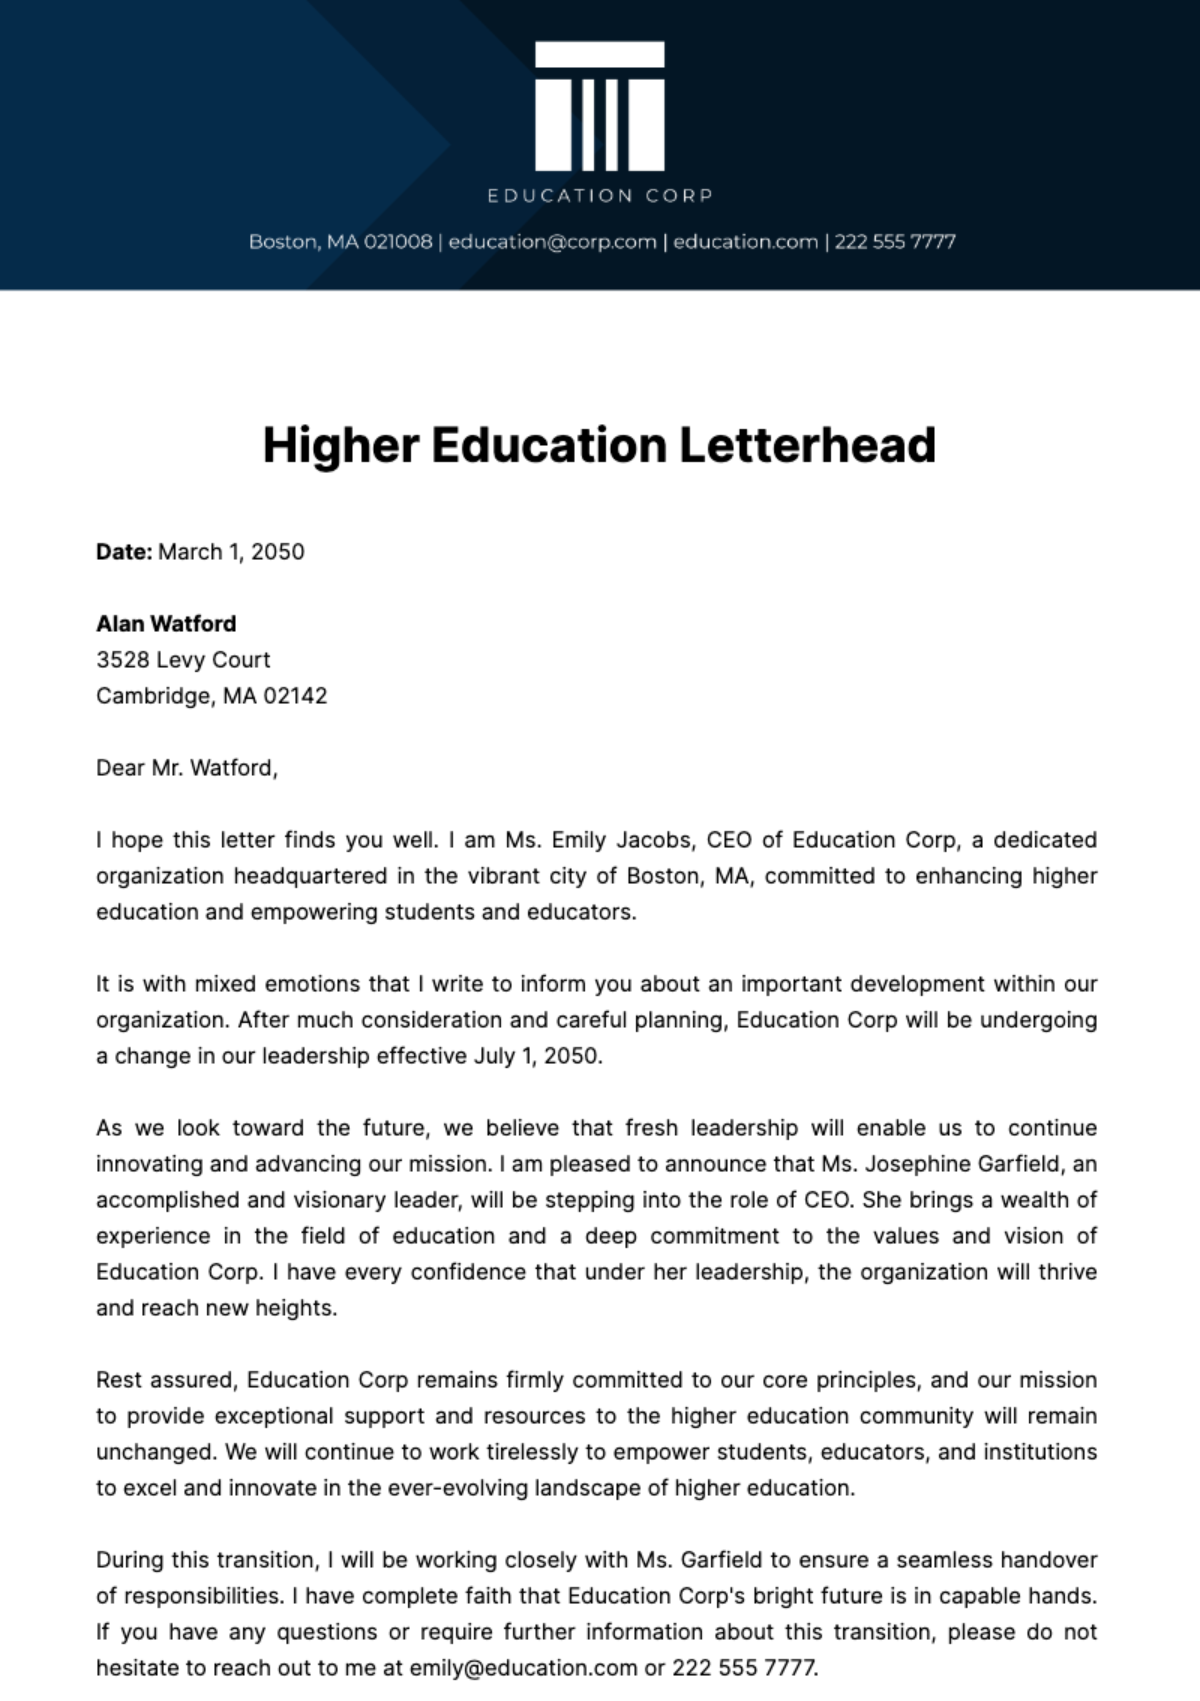 Higher Education Letterhead Template